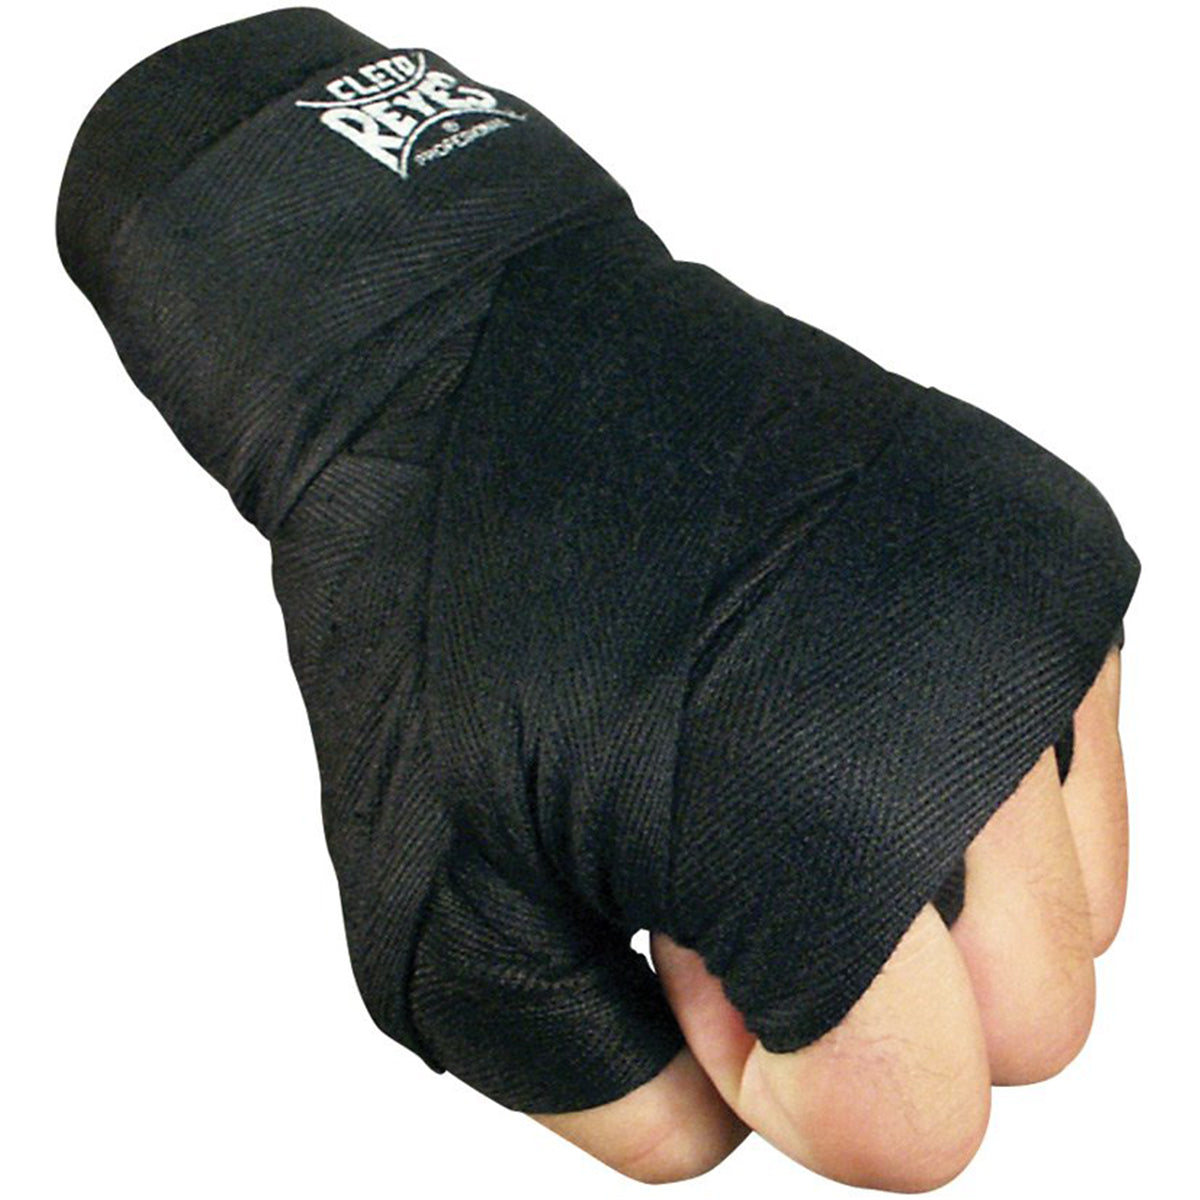 Cleto Reyes Evolution Boxing Handwraps - Large - Black Cleto Reyes